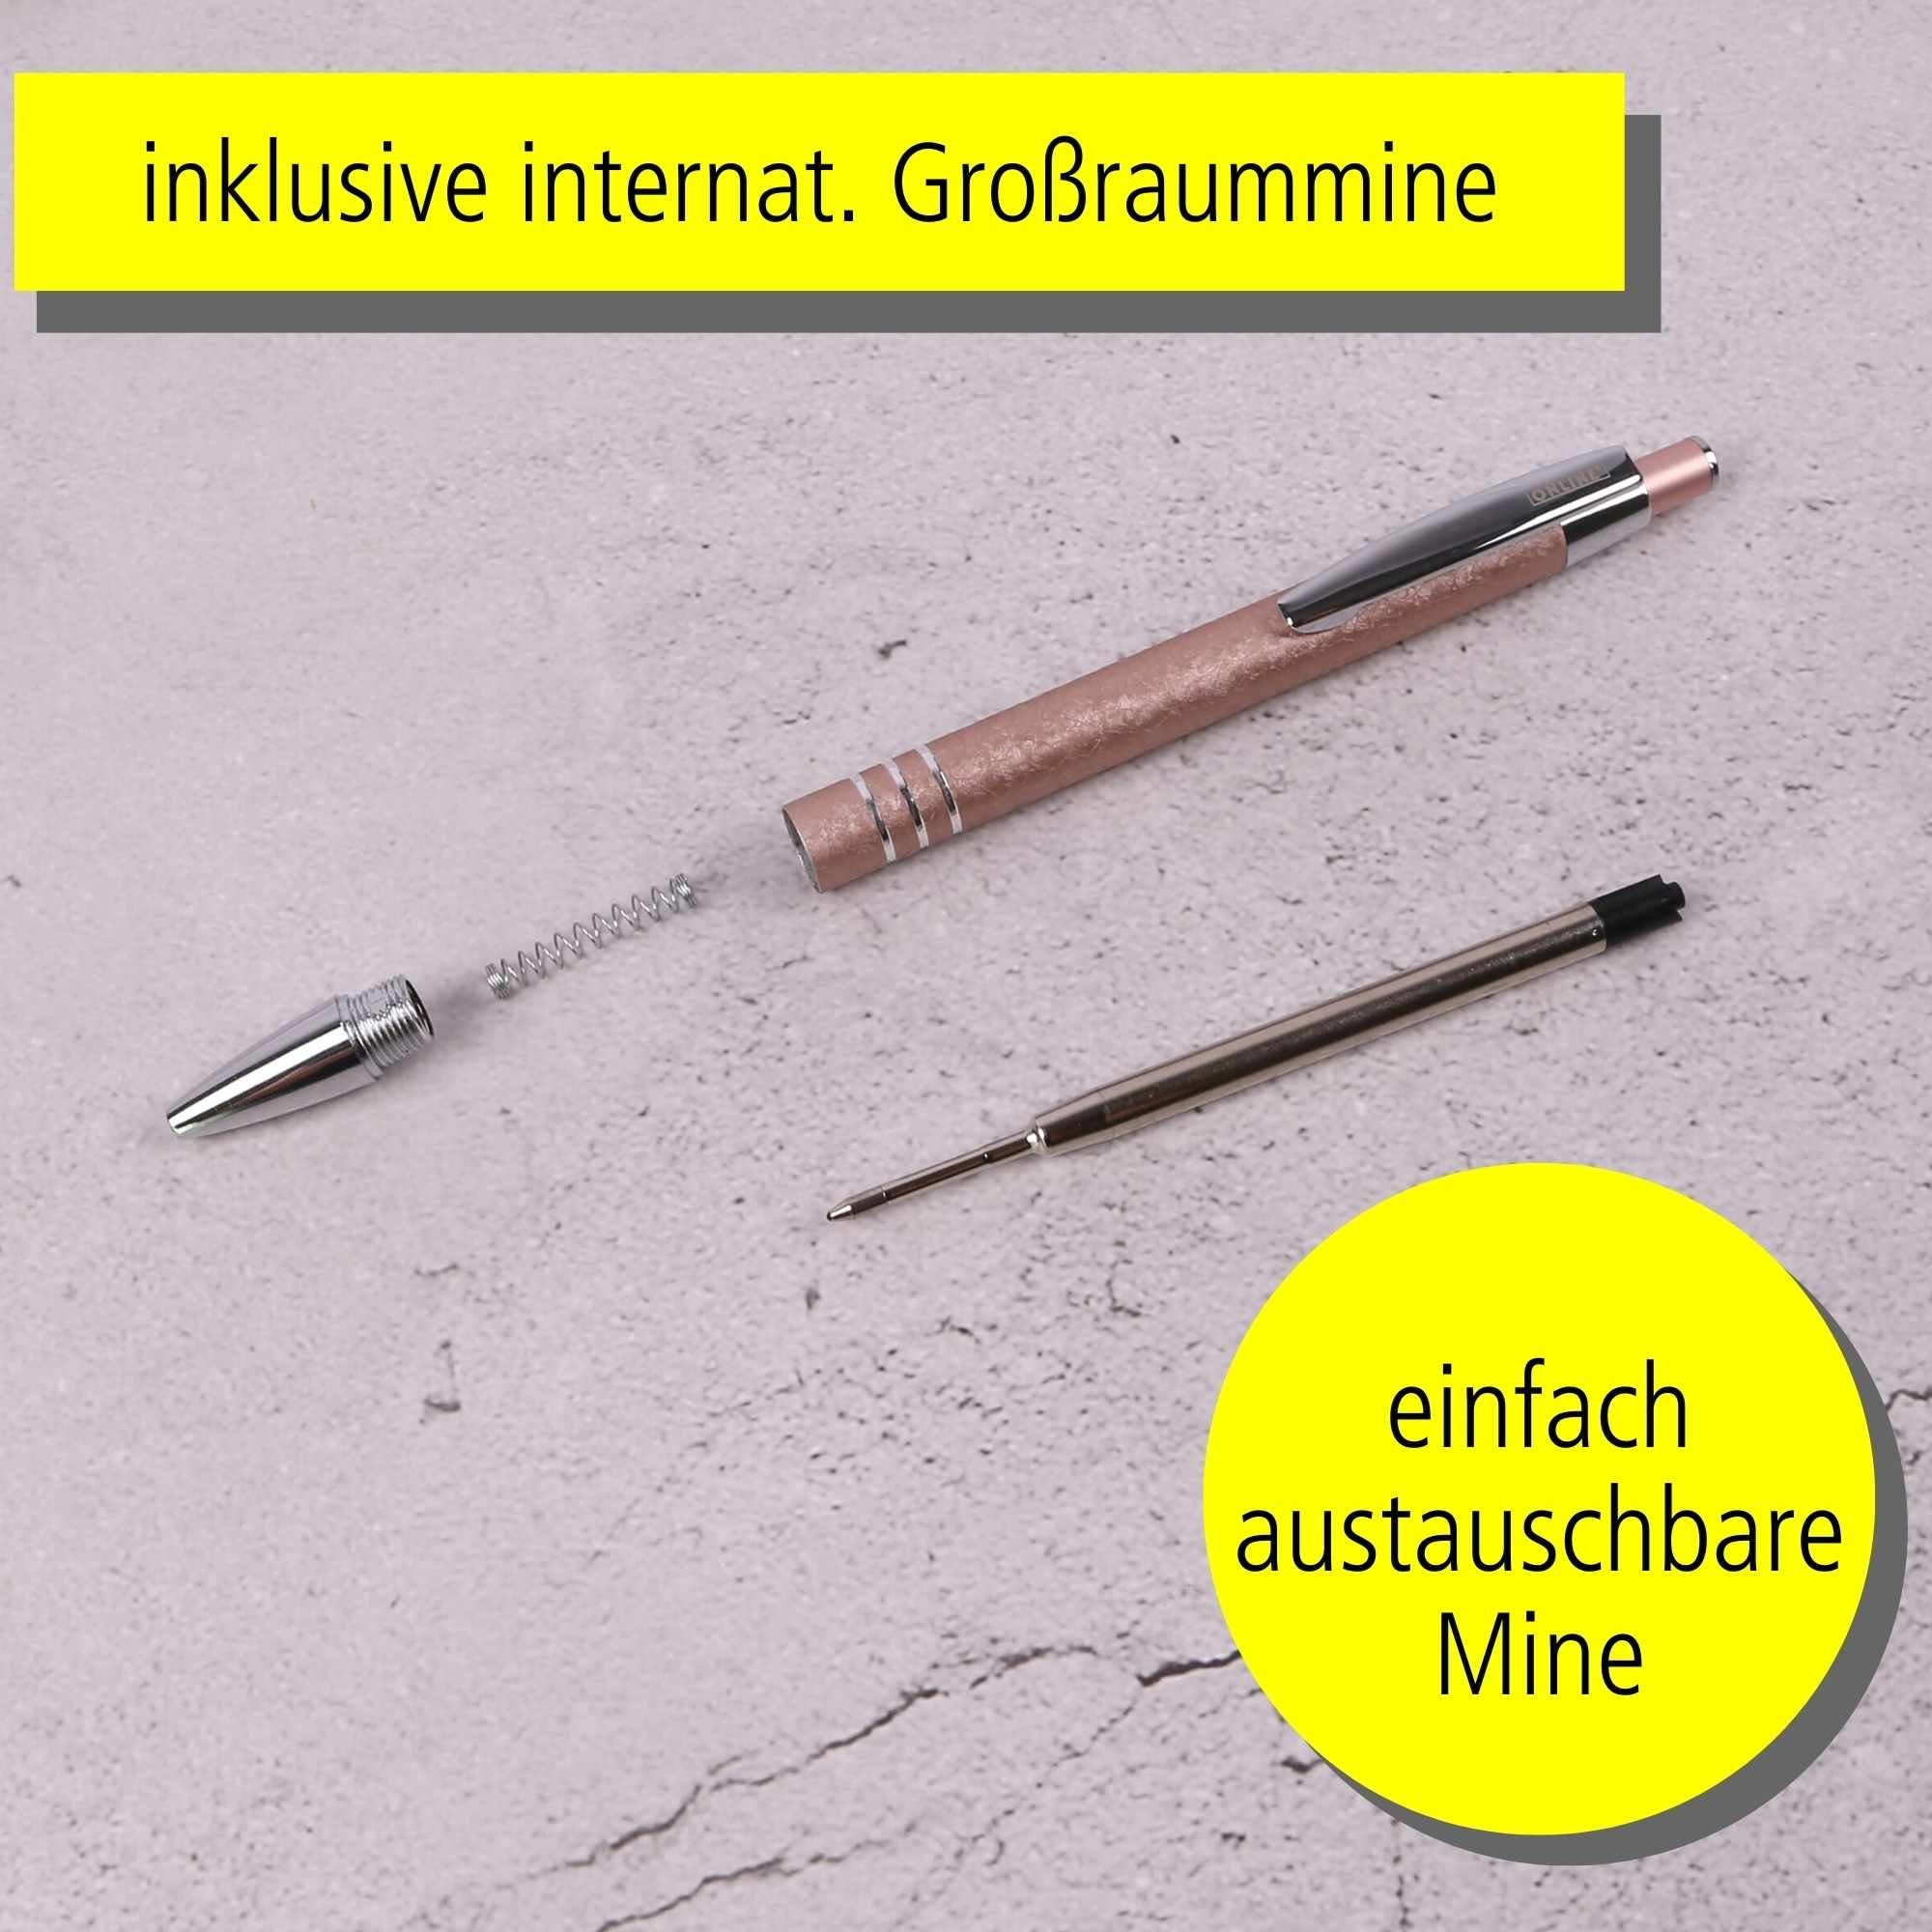 Online Pen aus in Graphite mit Metallclip, Pen Geschenkbox Aluminium, Rosegold Druckkugelschreiber, Kugelschreiber